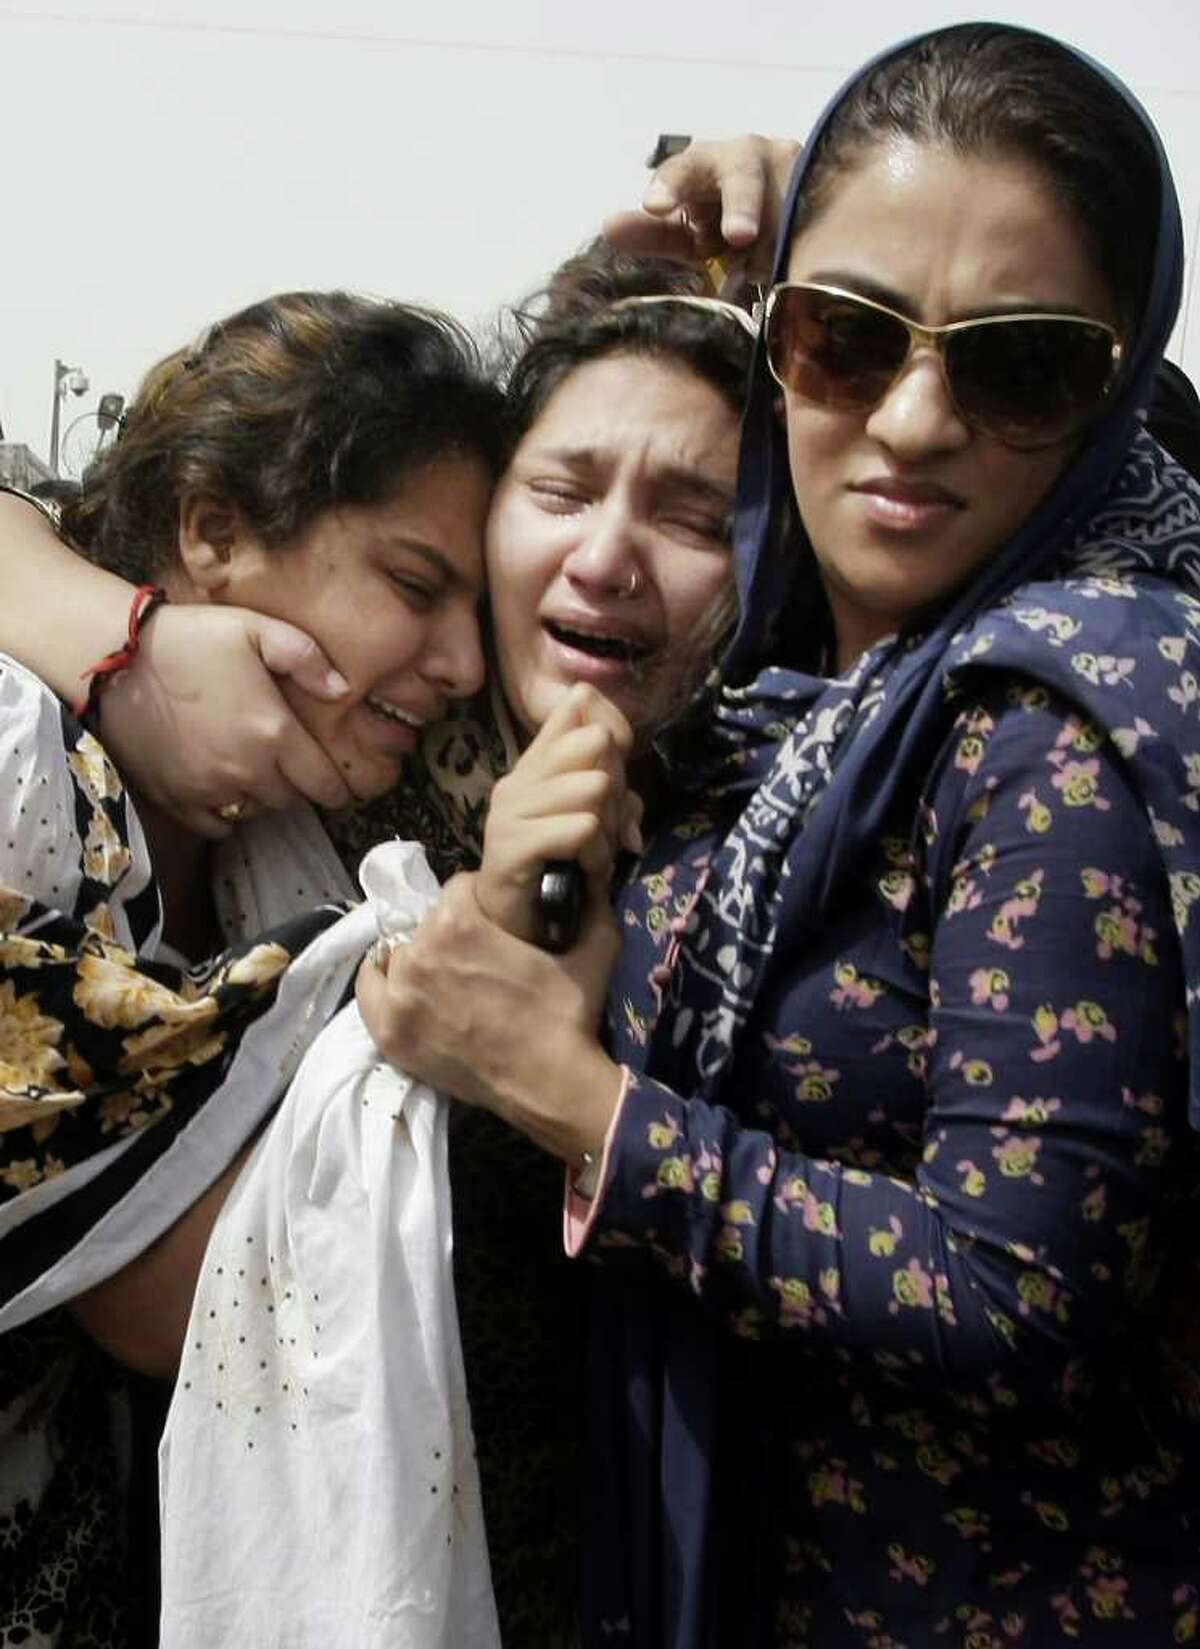 Family members of acid attack victim Fakhra Younus mourn her death in Karachi, Pakistan.